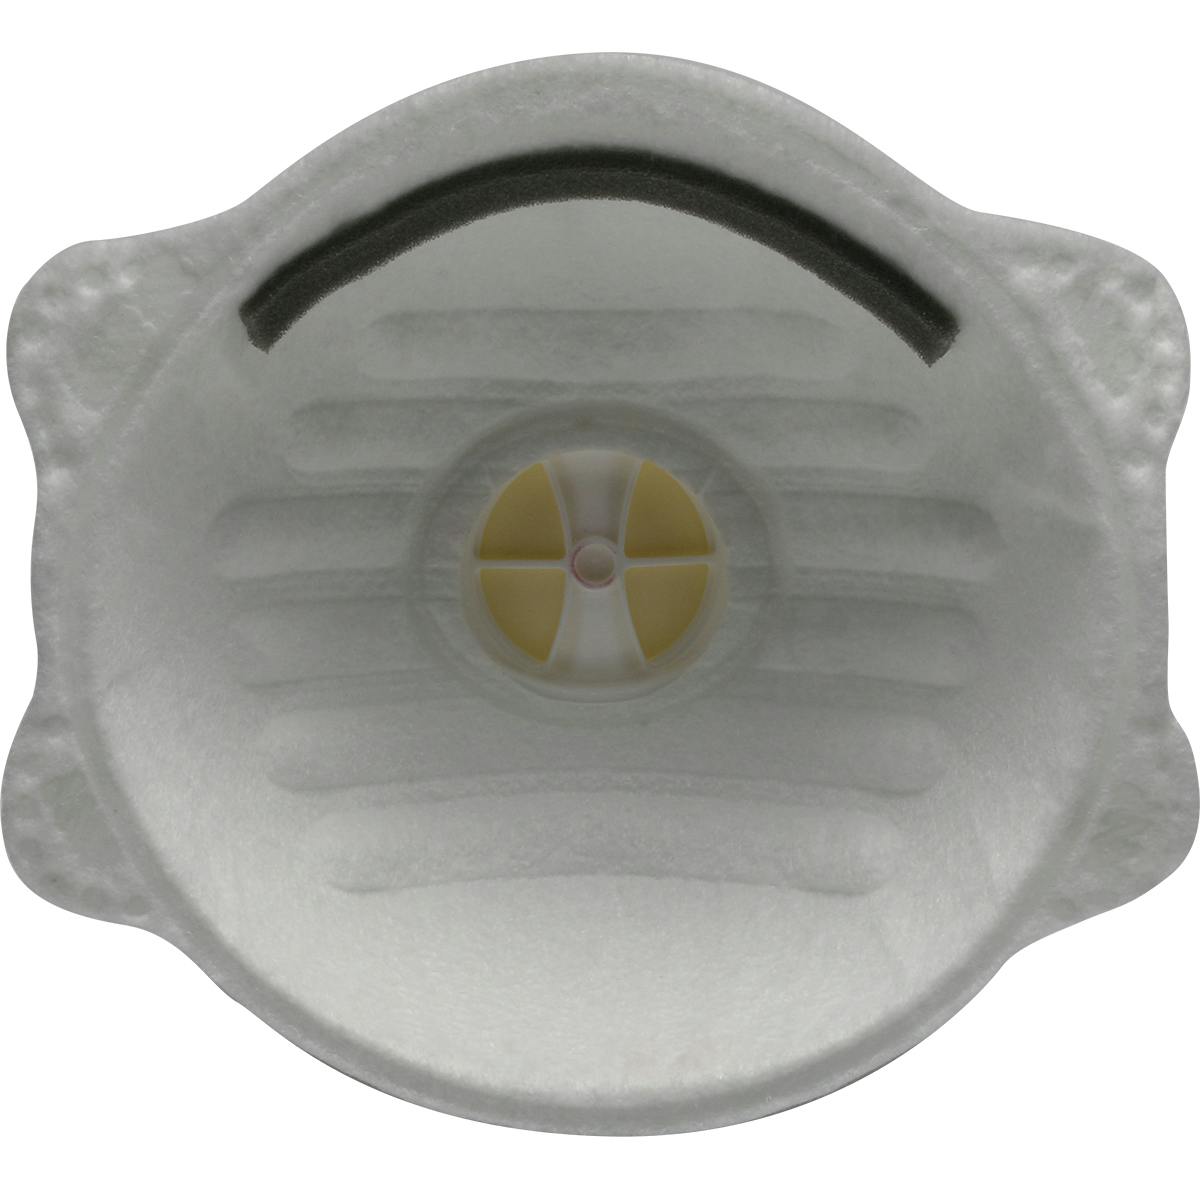 Standard N95 Disposable Respirator - 10 Pack, White (270-RPD514N95) - OS